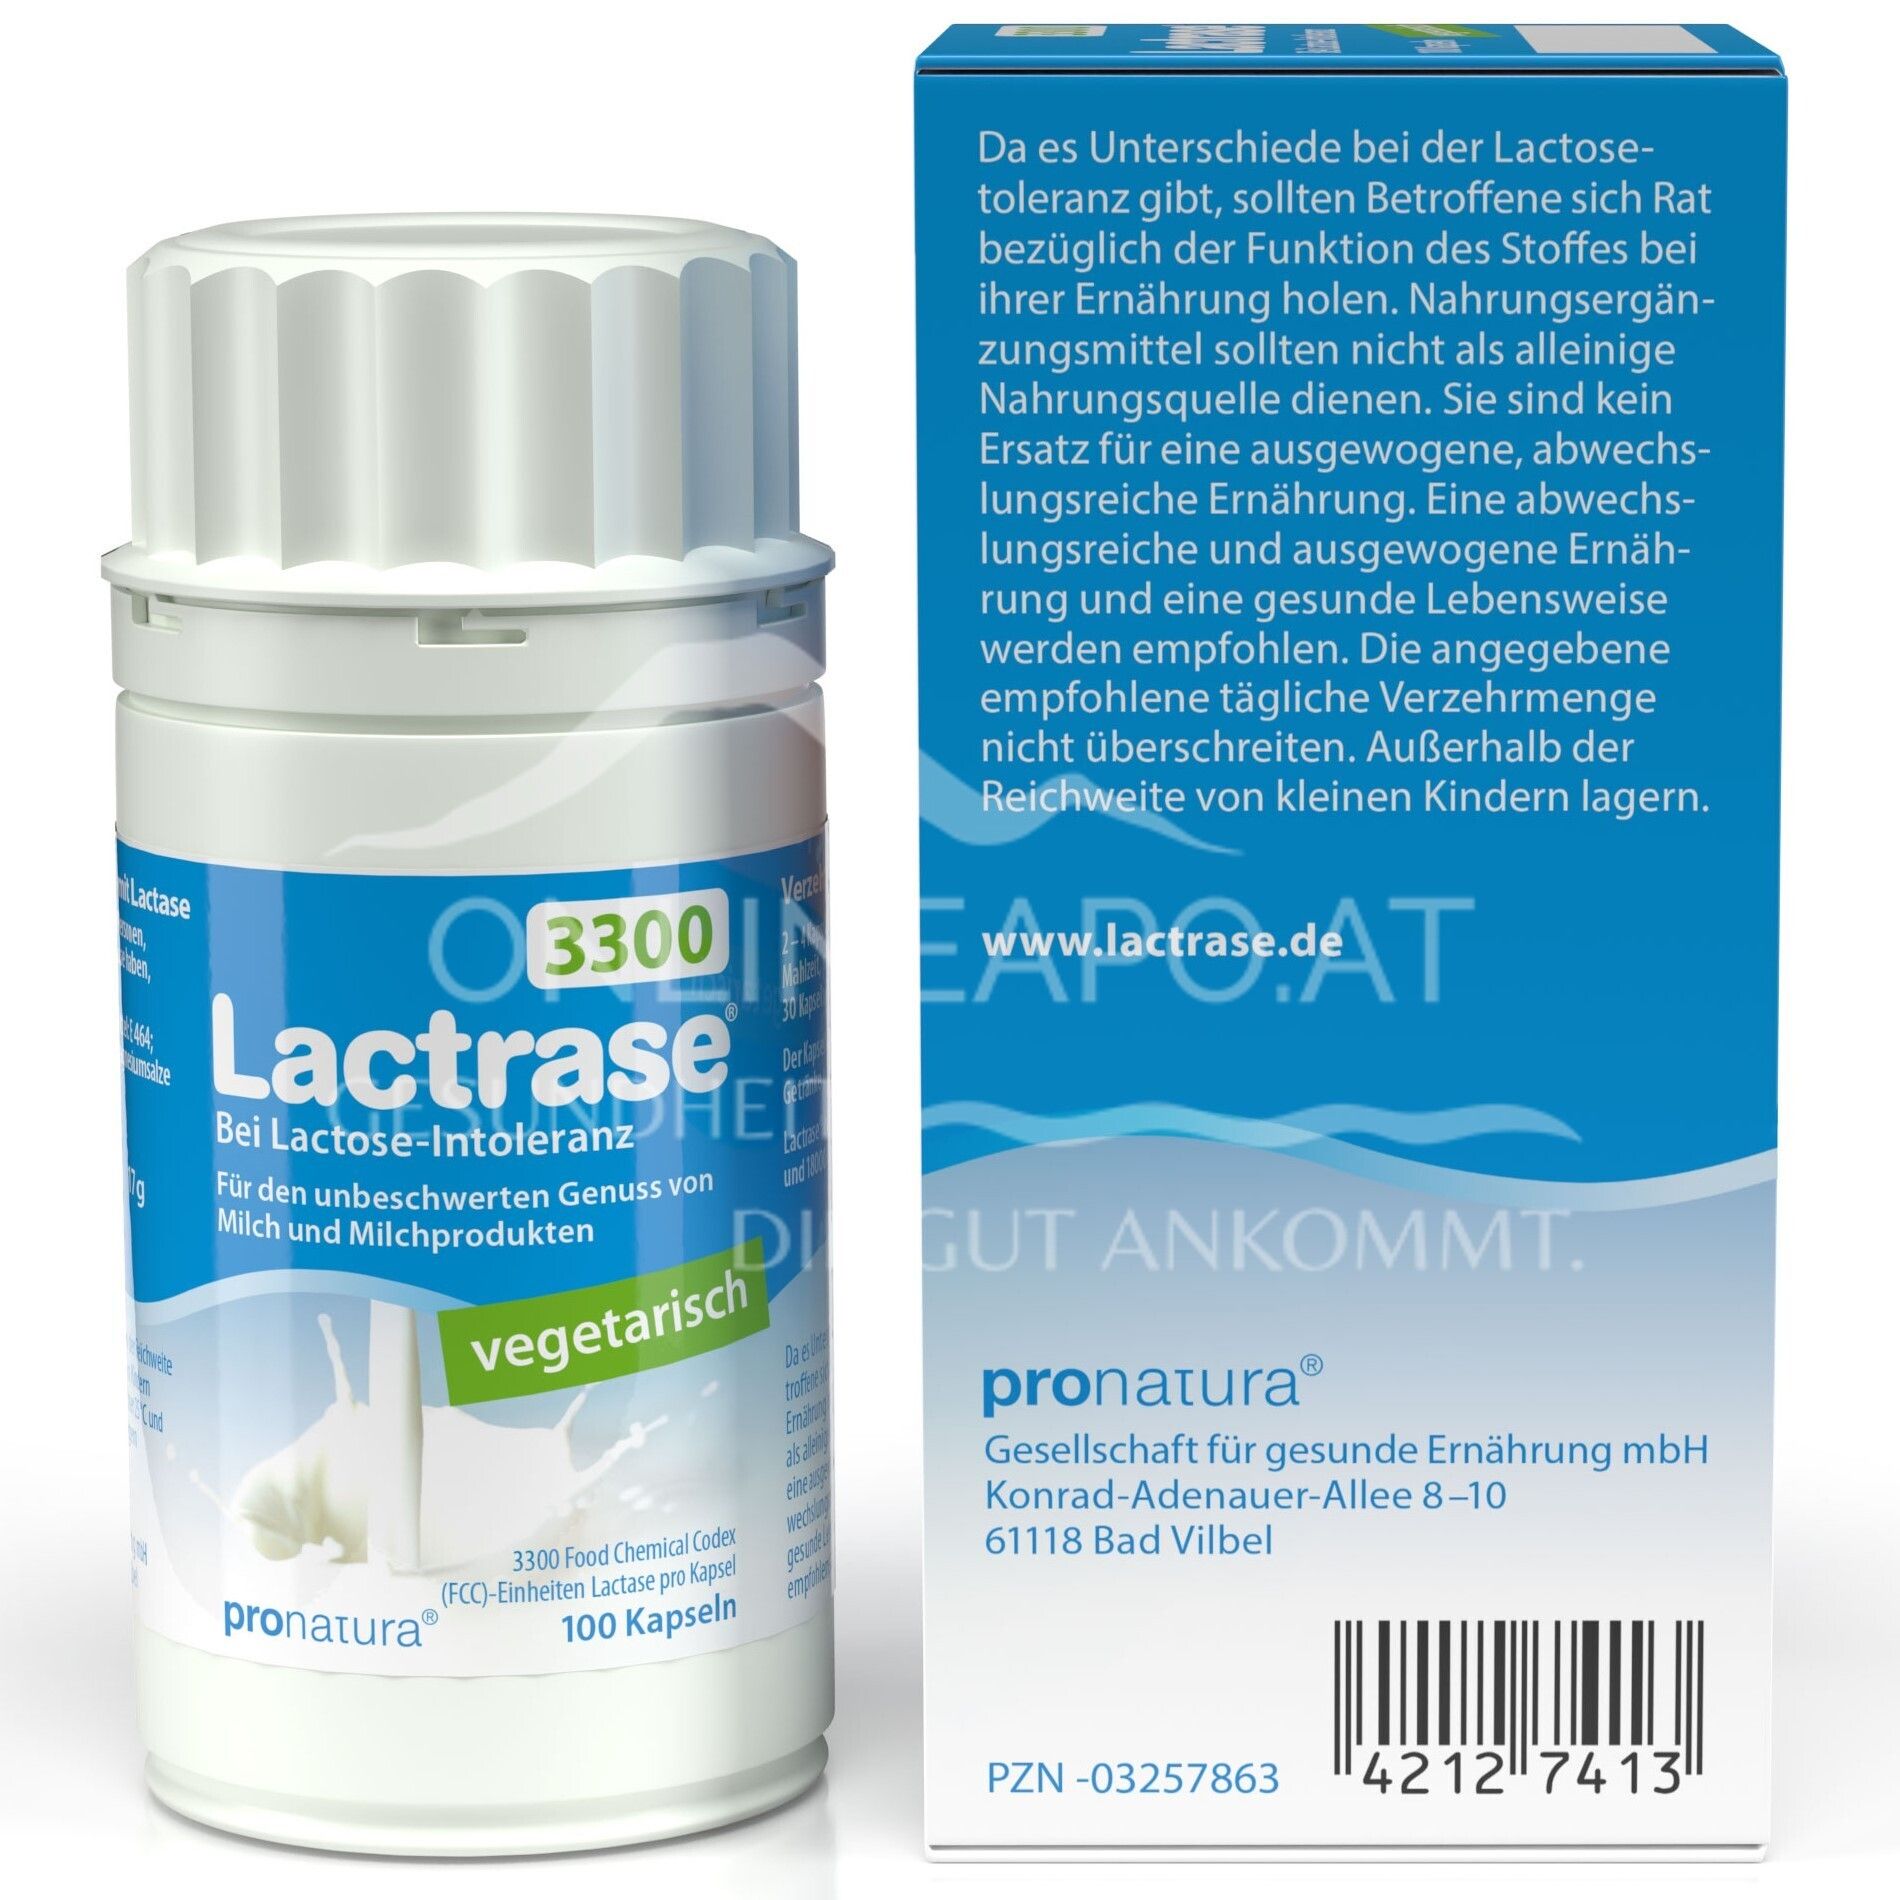 Lactrase® 3300 FCC Kapseln vegetarisch